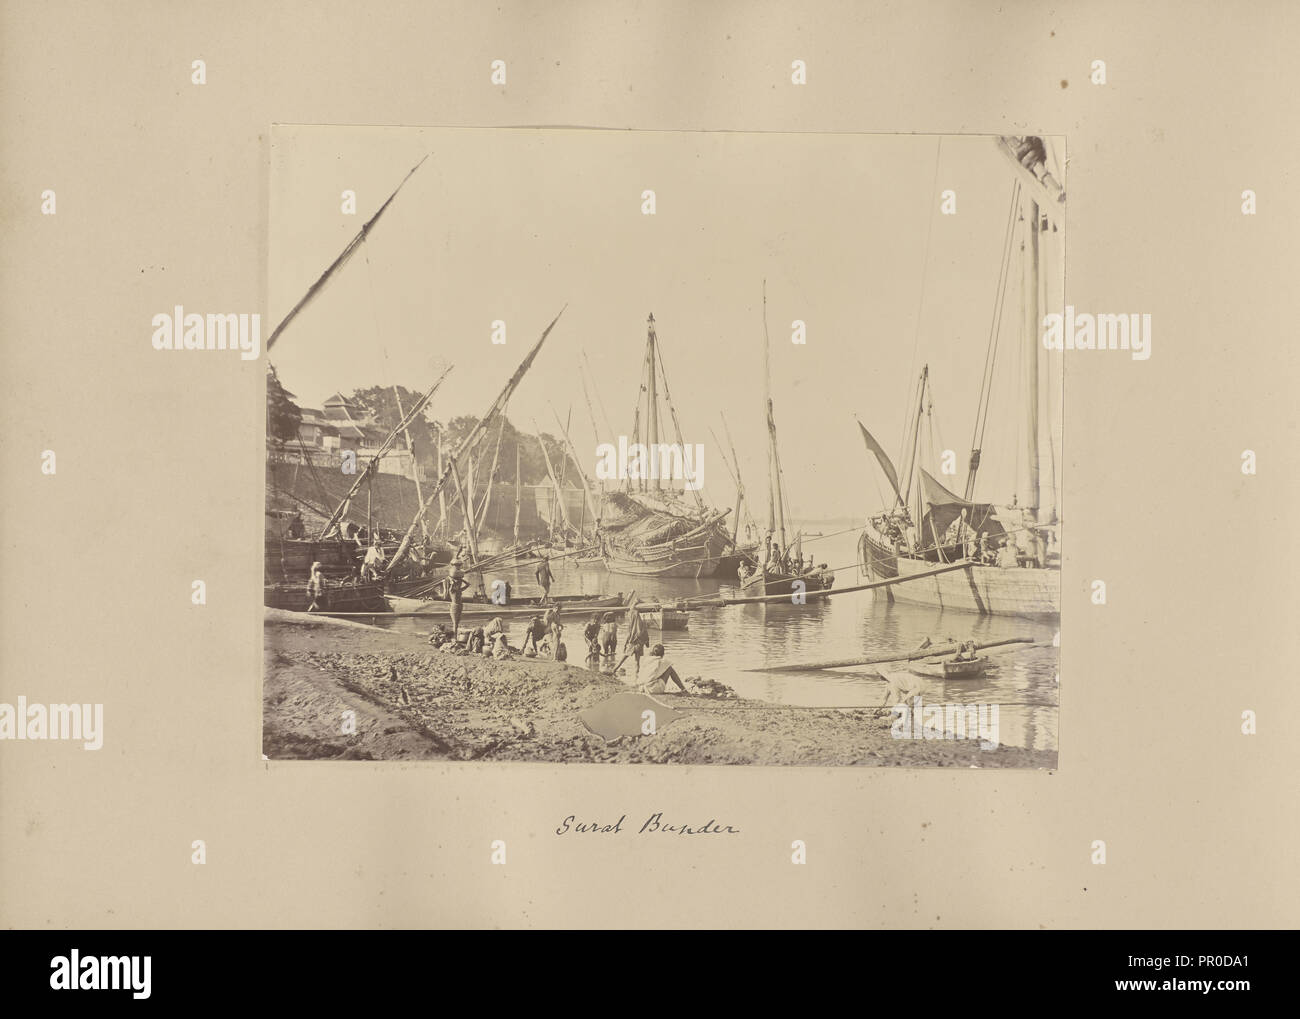 Surat Bunder; India; 1886 - 1889; Albumen silver print Stock Photo